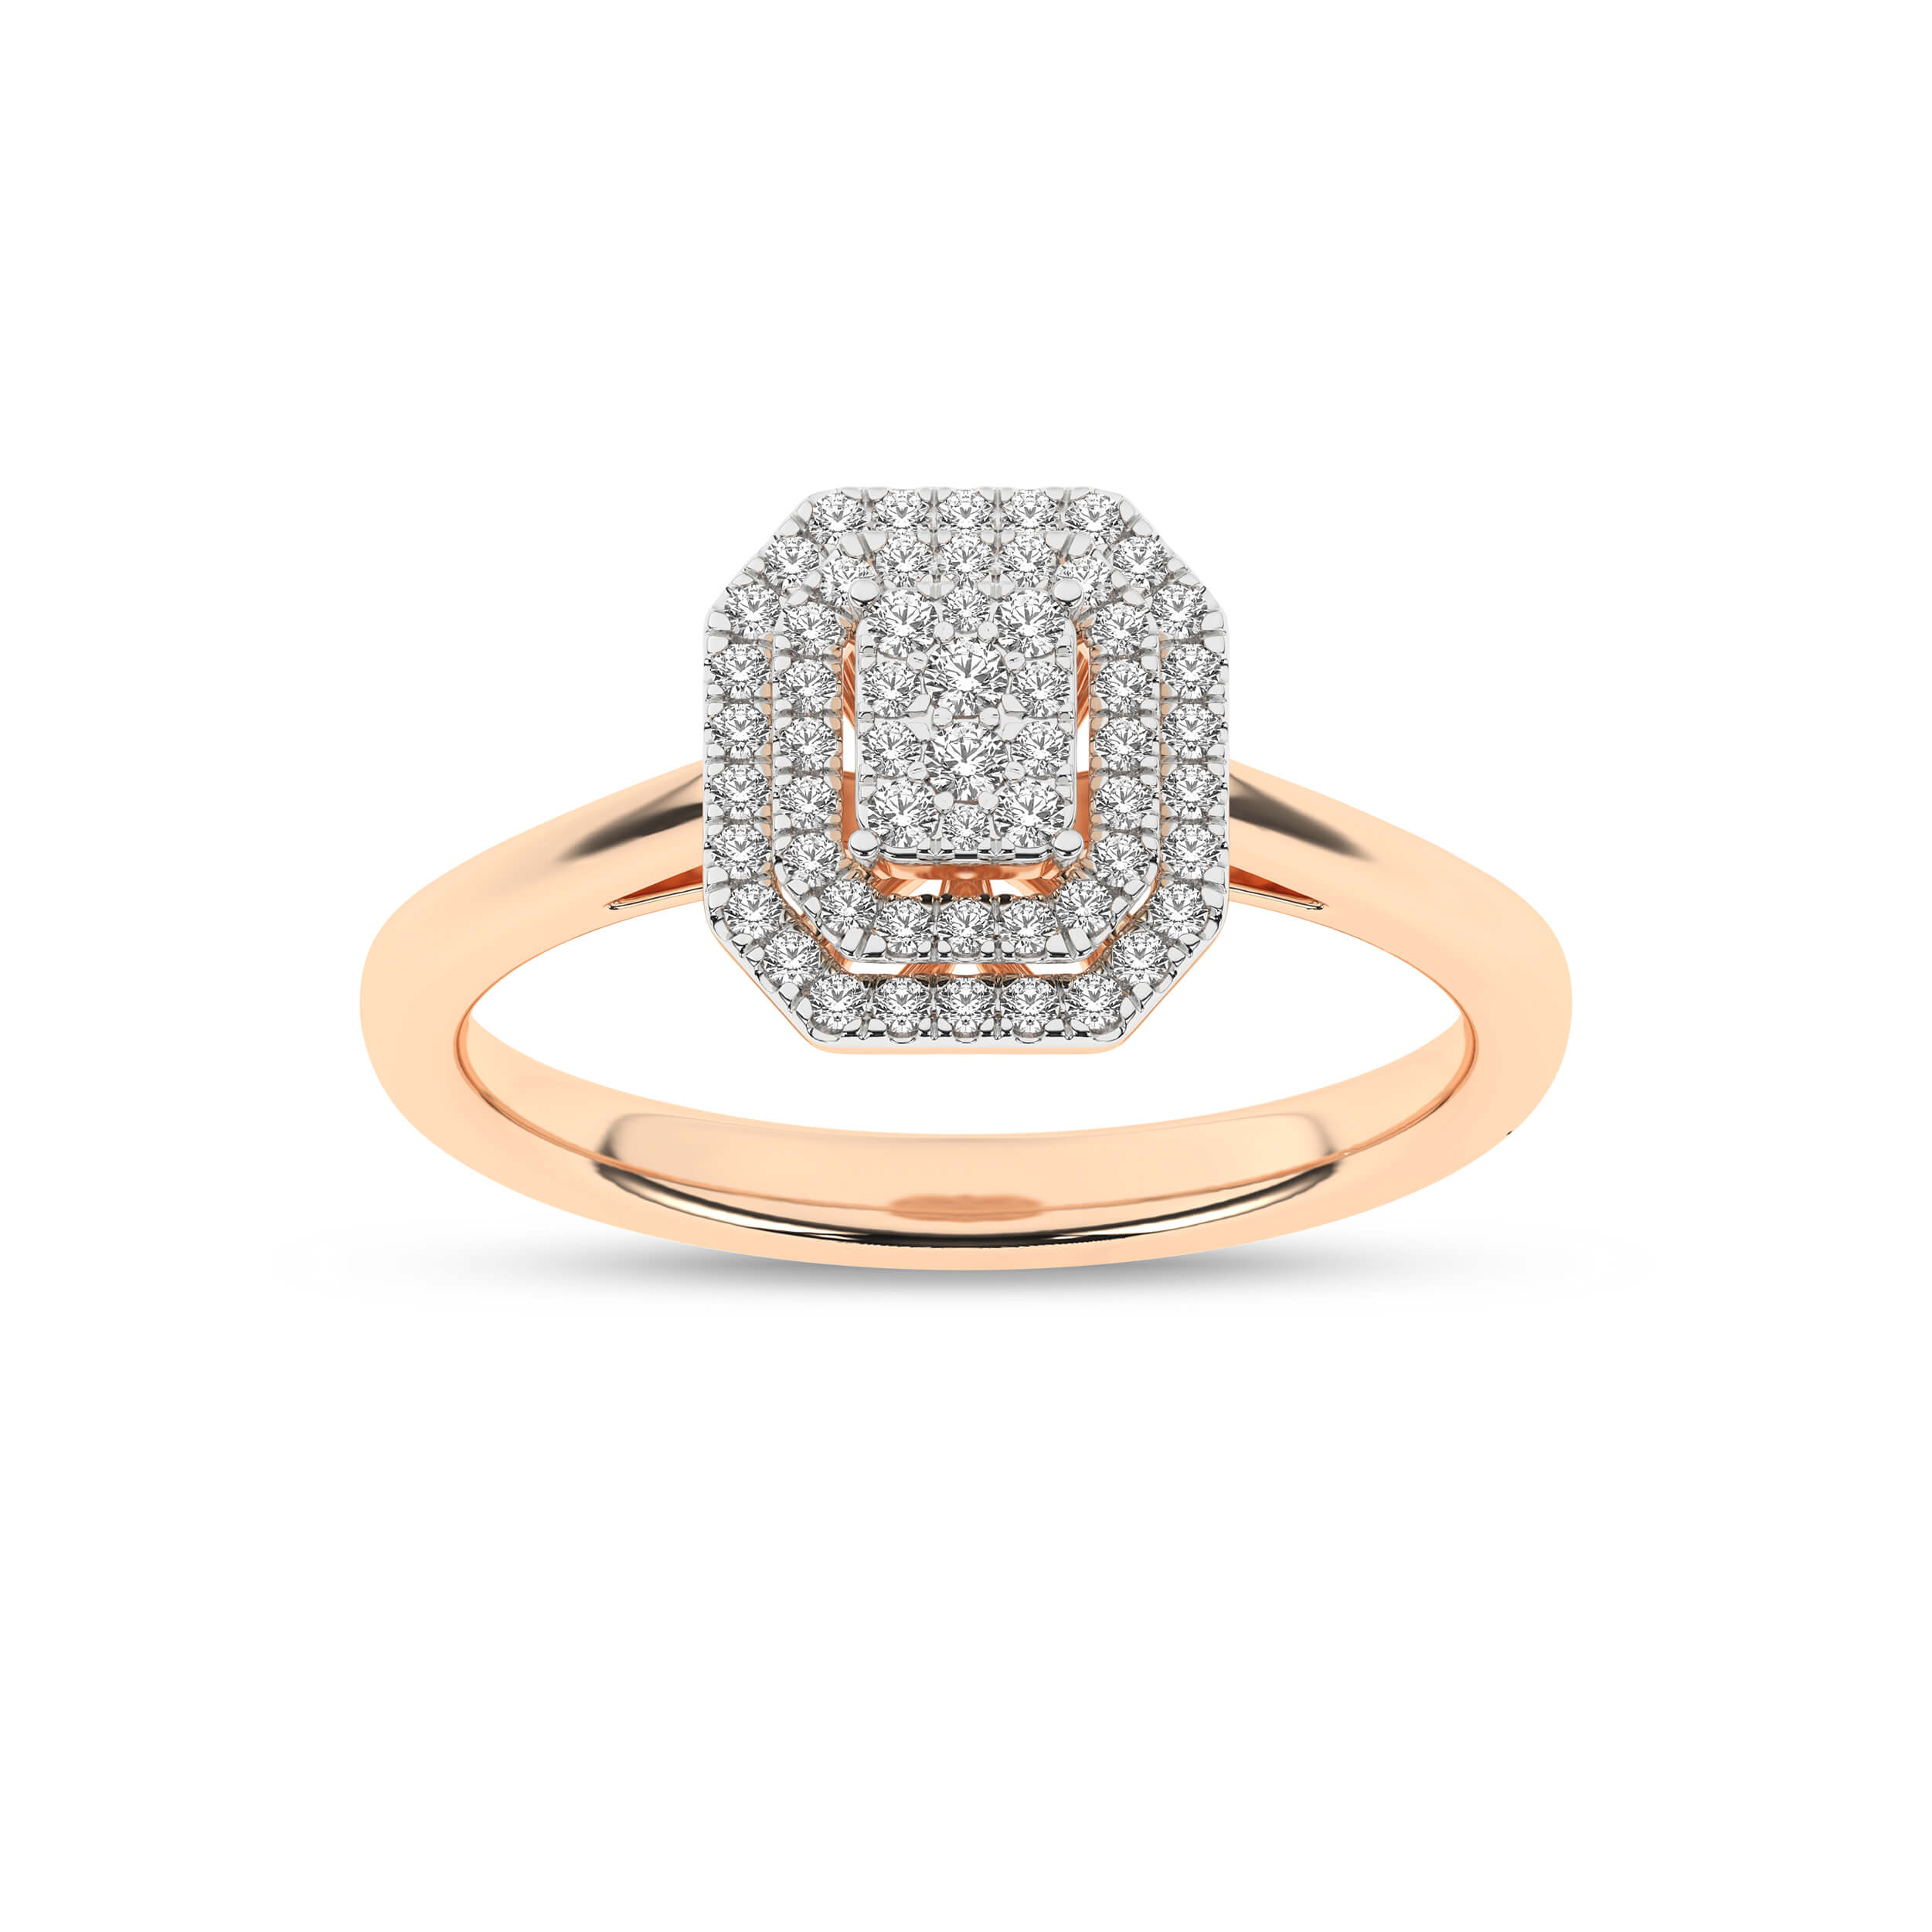 Inel din Aur Roz 18K cu Diamante 0.22Ct, articol RB21240EG, previzualizare foto 1